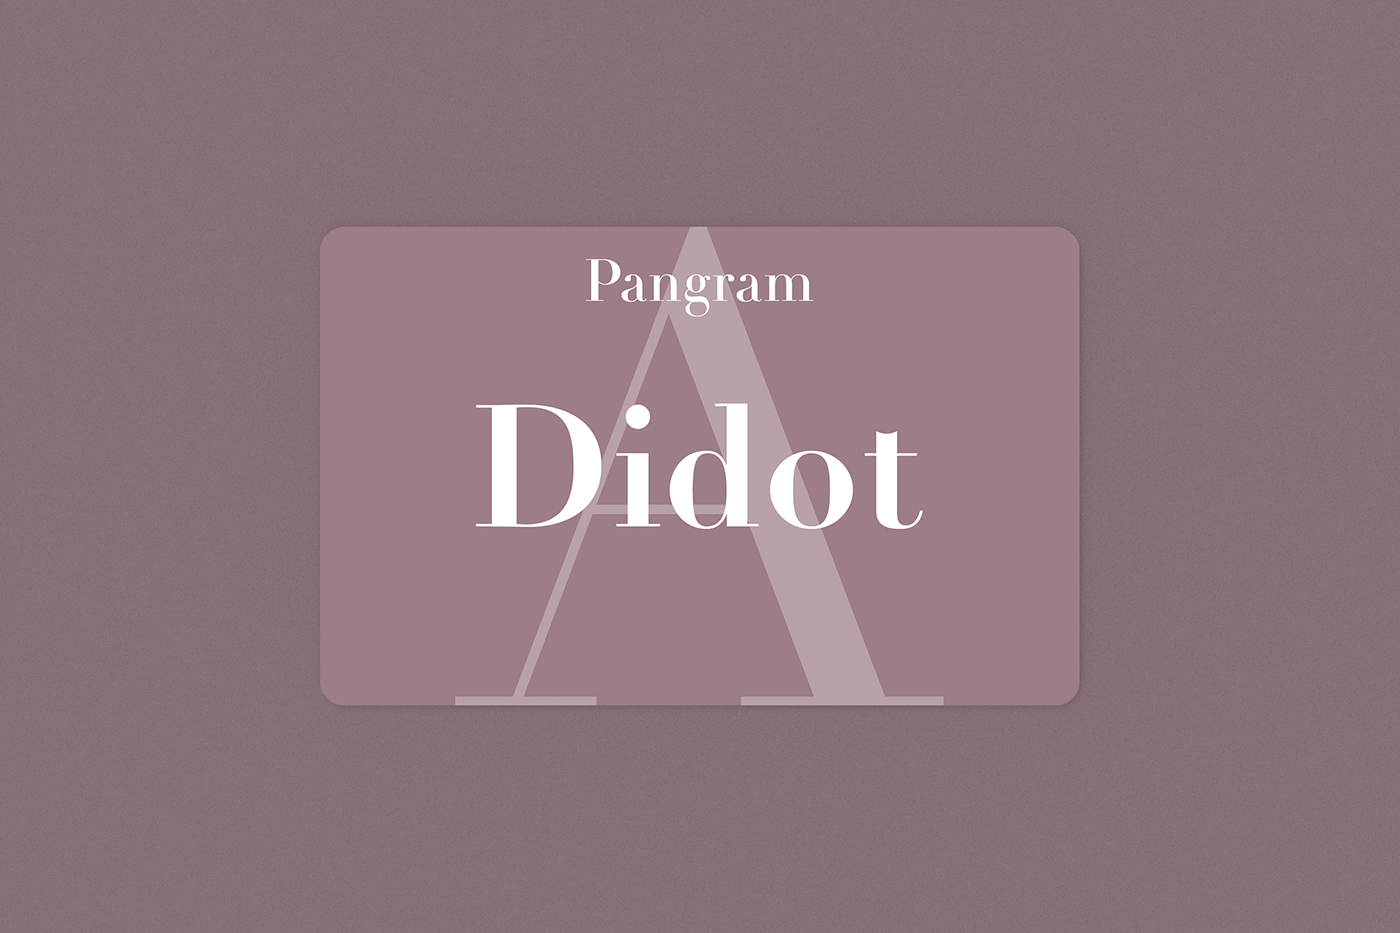 adobe illustrator didot font Didot Poster Didot Typeface firmin font pangram tipografia tipography typographic